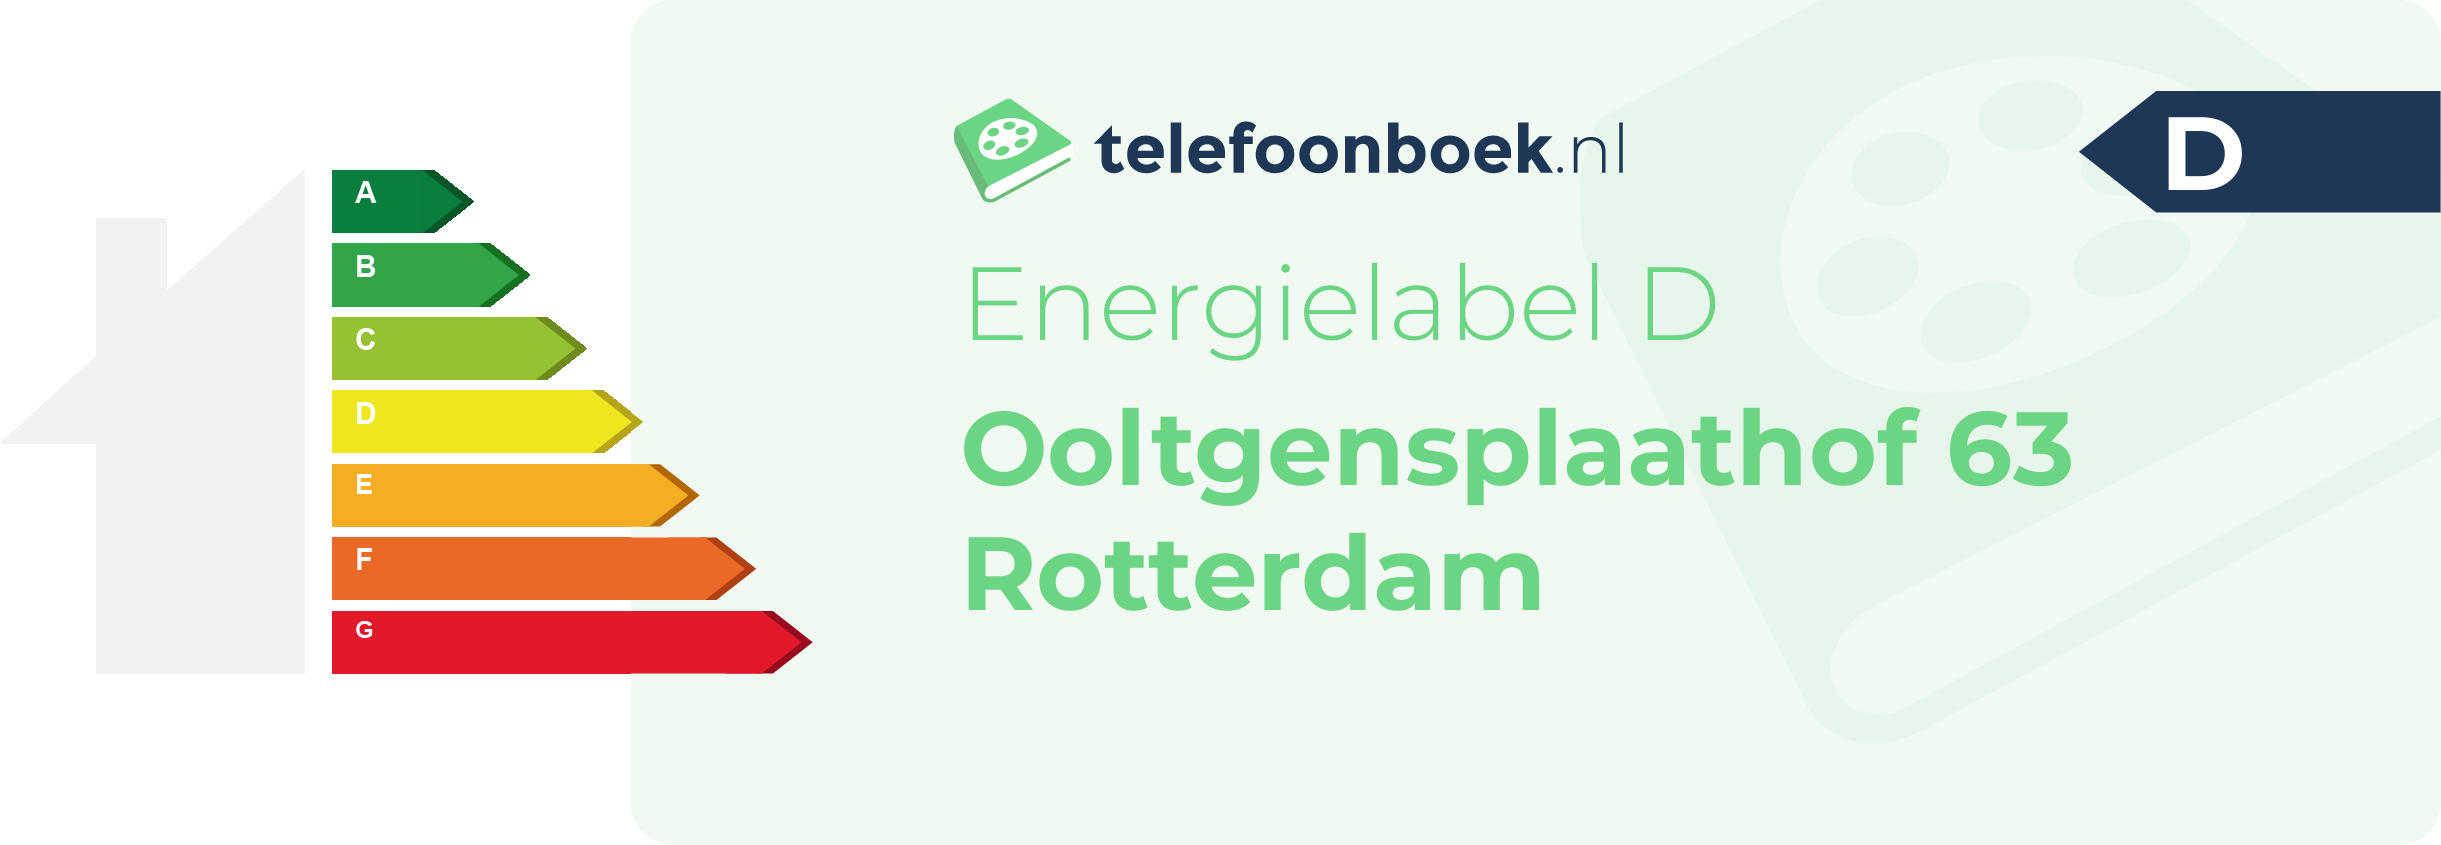 Energielabel Ooltgensplaathof 63 Rotterdam